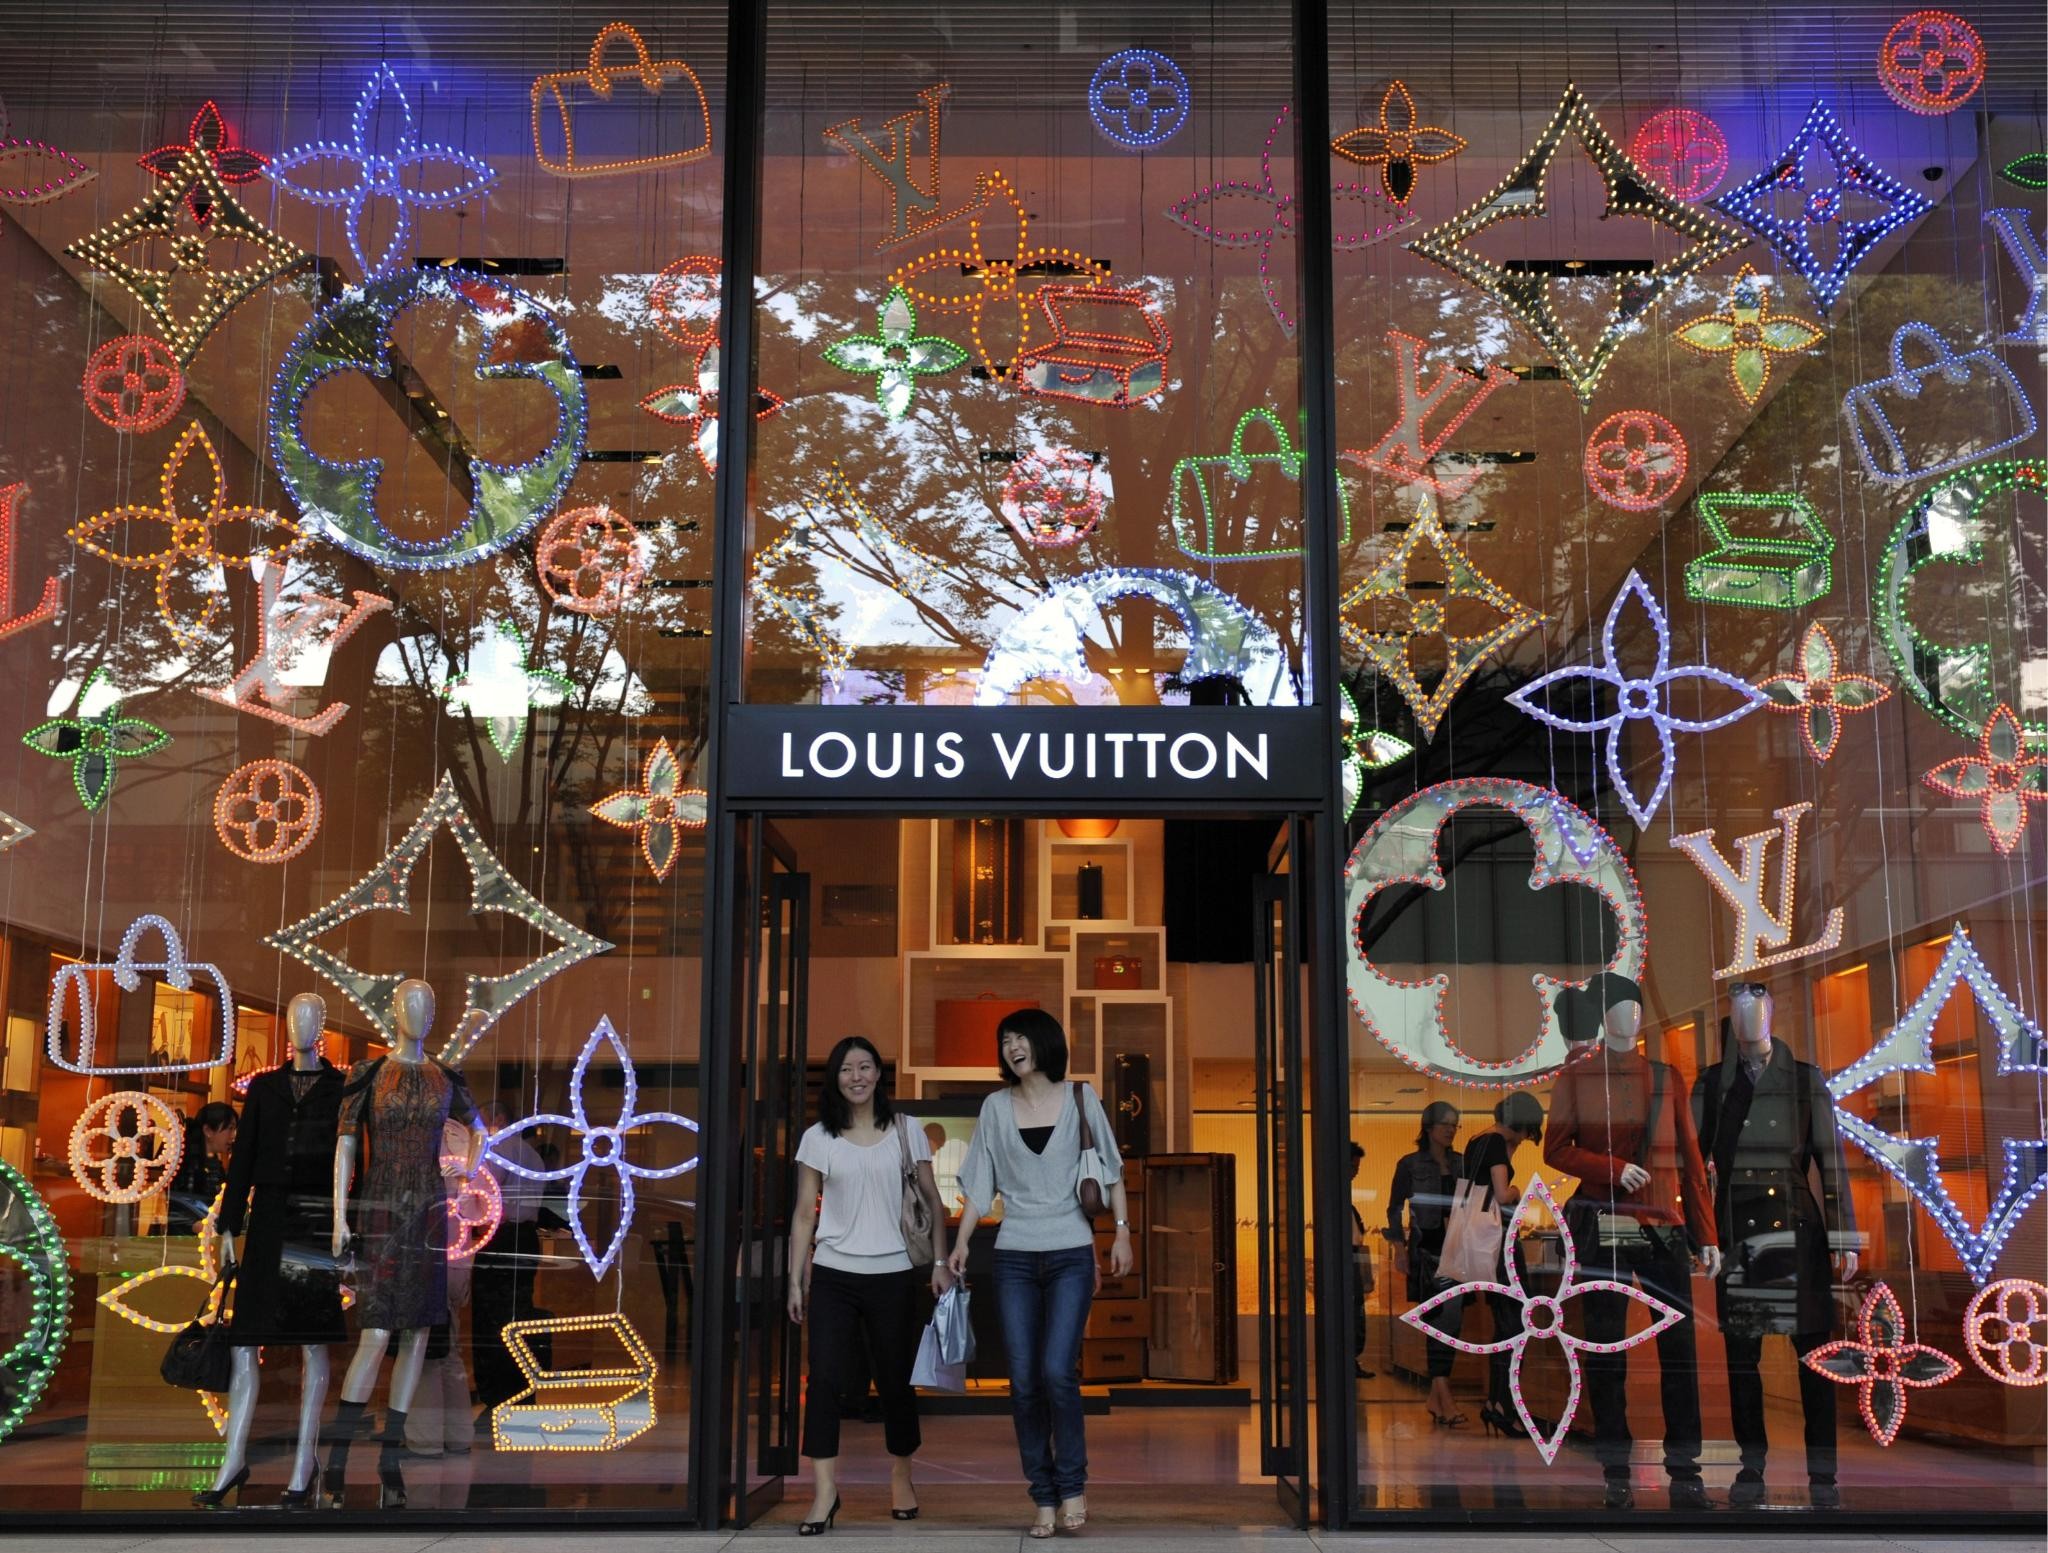 File:Louis Vuitton Store in Omotesando.jpg - Wikimedia Commons